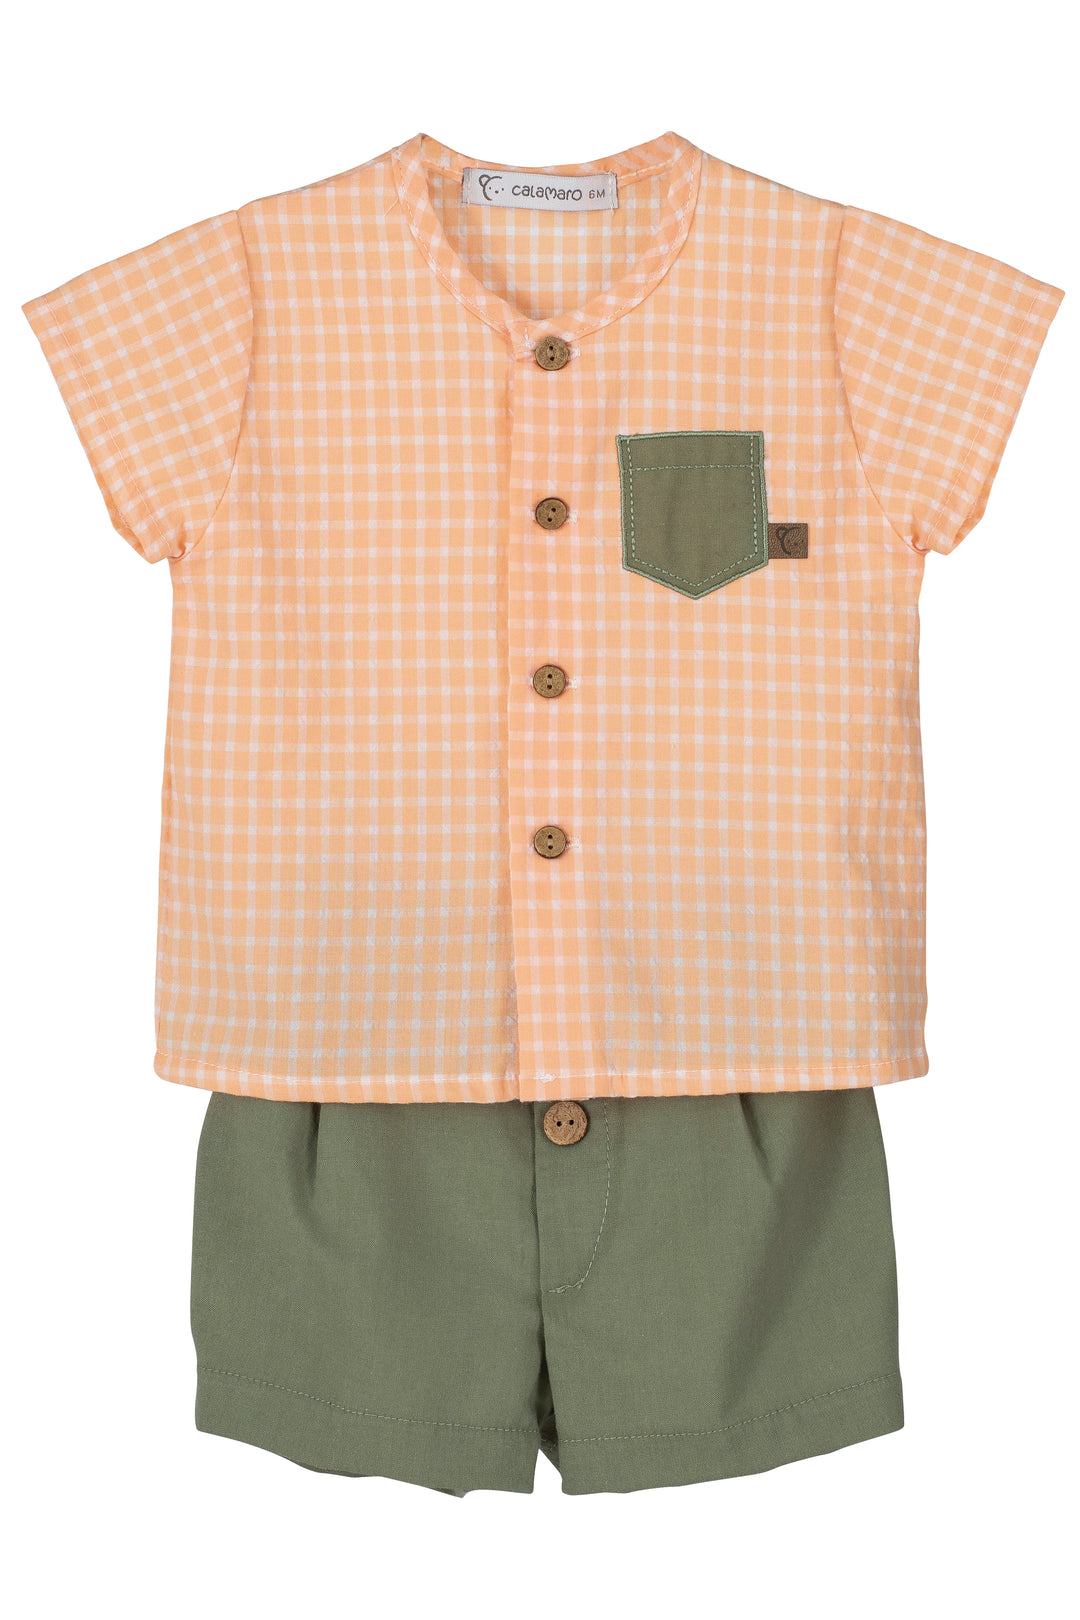 Calamaro PREORDER "Asher" Peach Gingham Shirt & Khaki Shorts | Millie and John